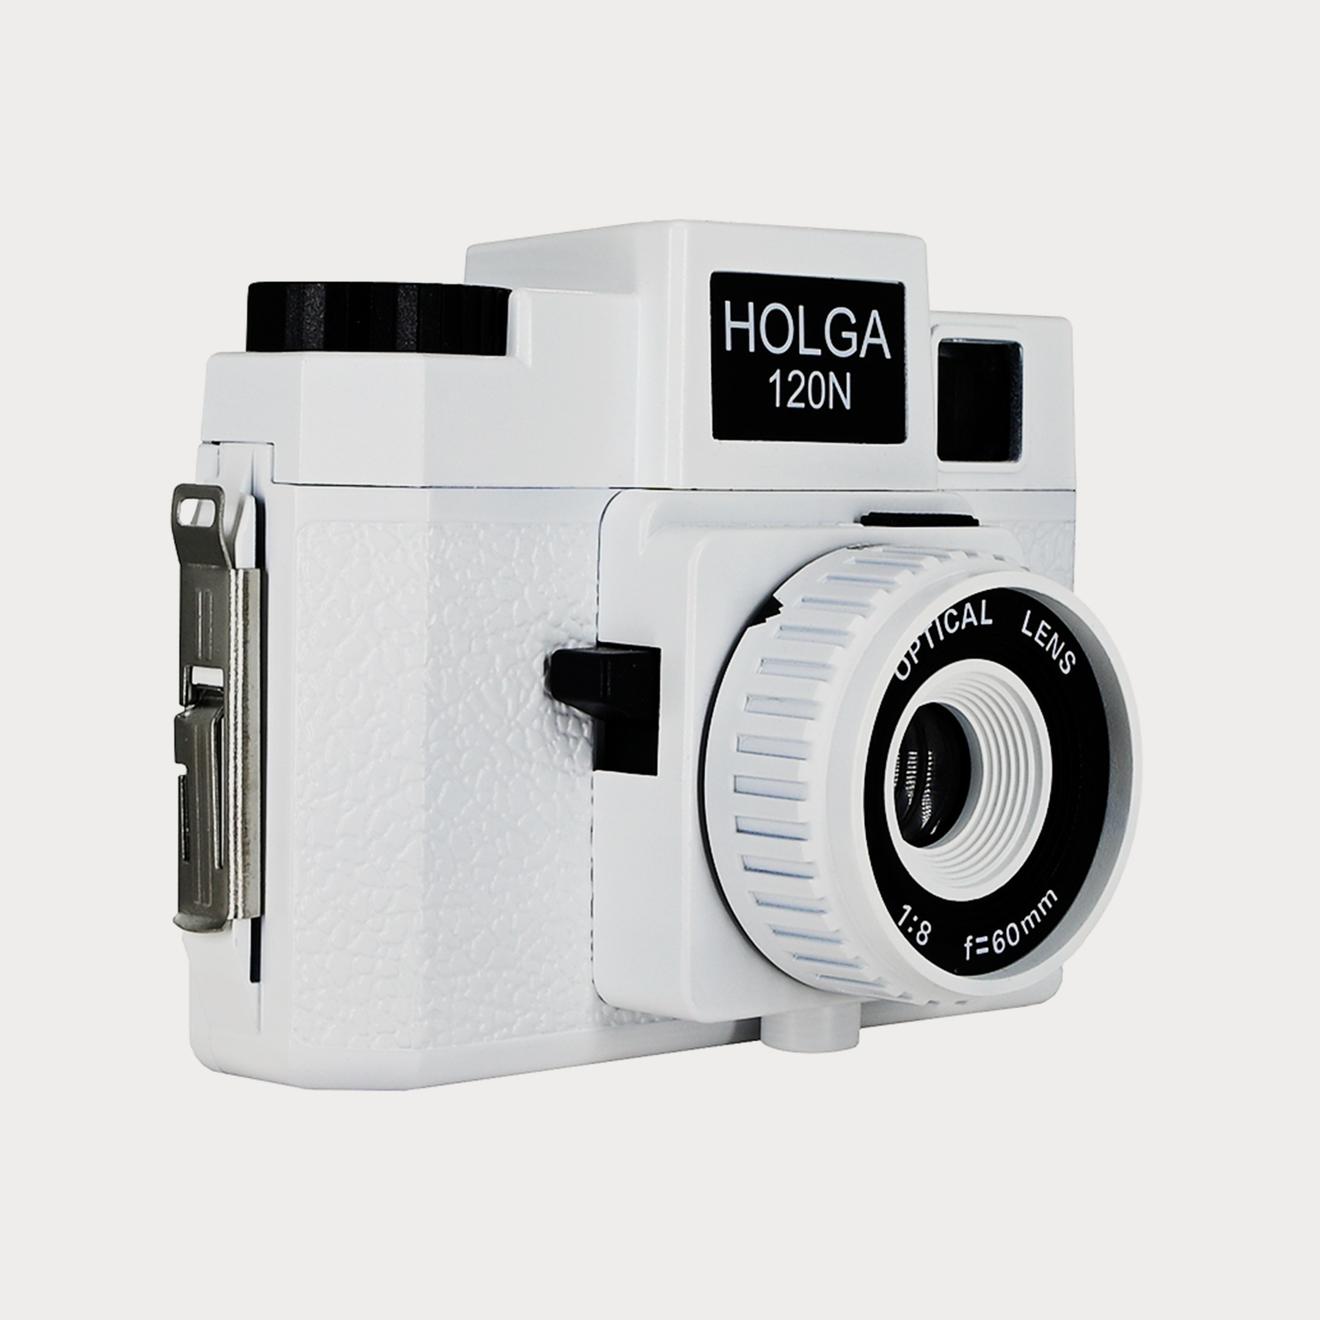 shopmoment.com | Holga Holga 120N Medium Format Film Camera with Hotshoe